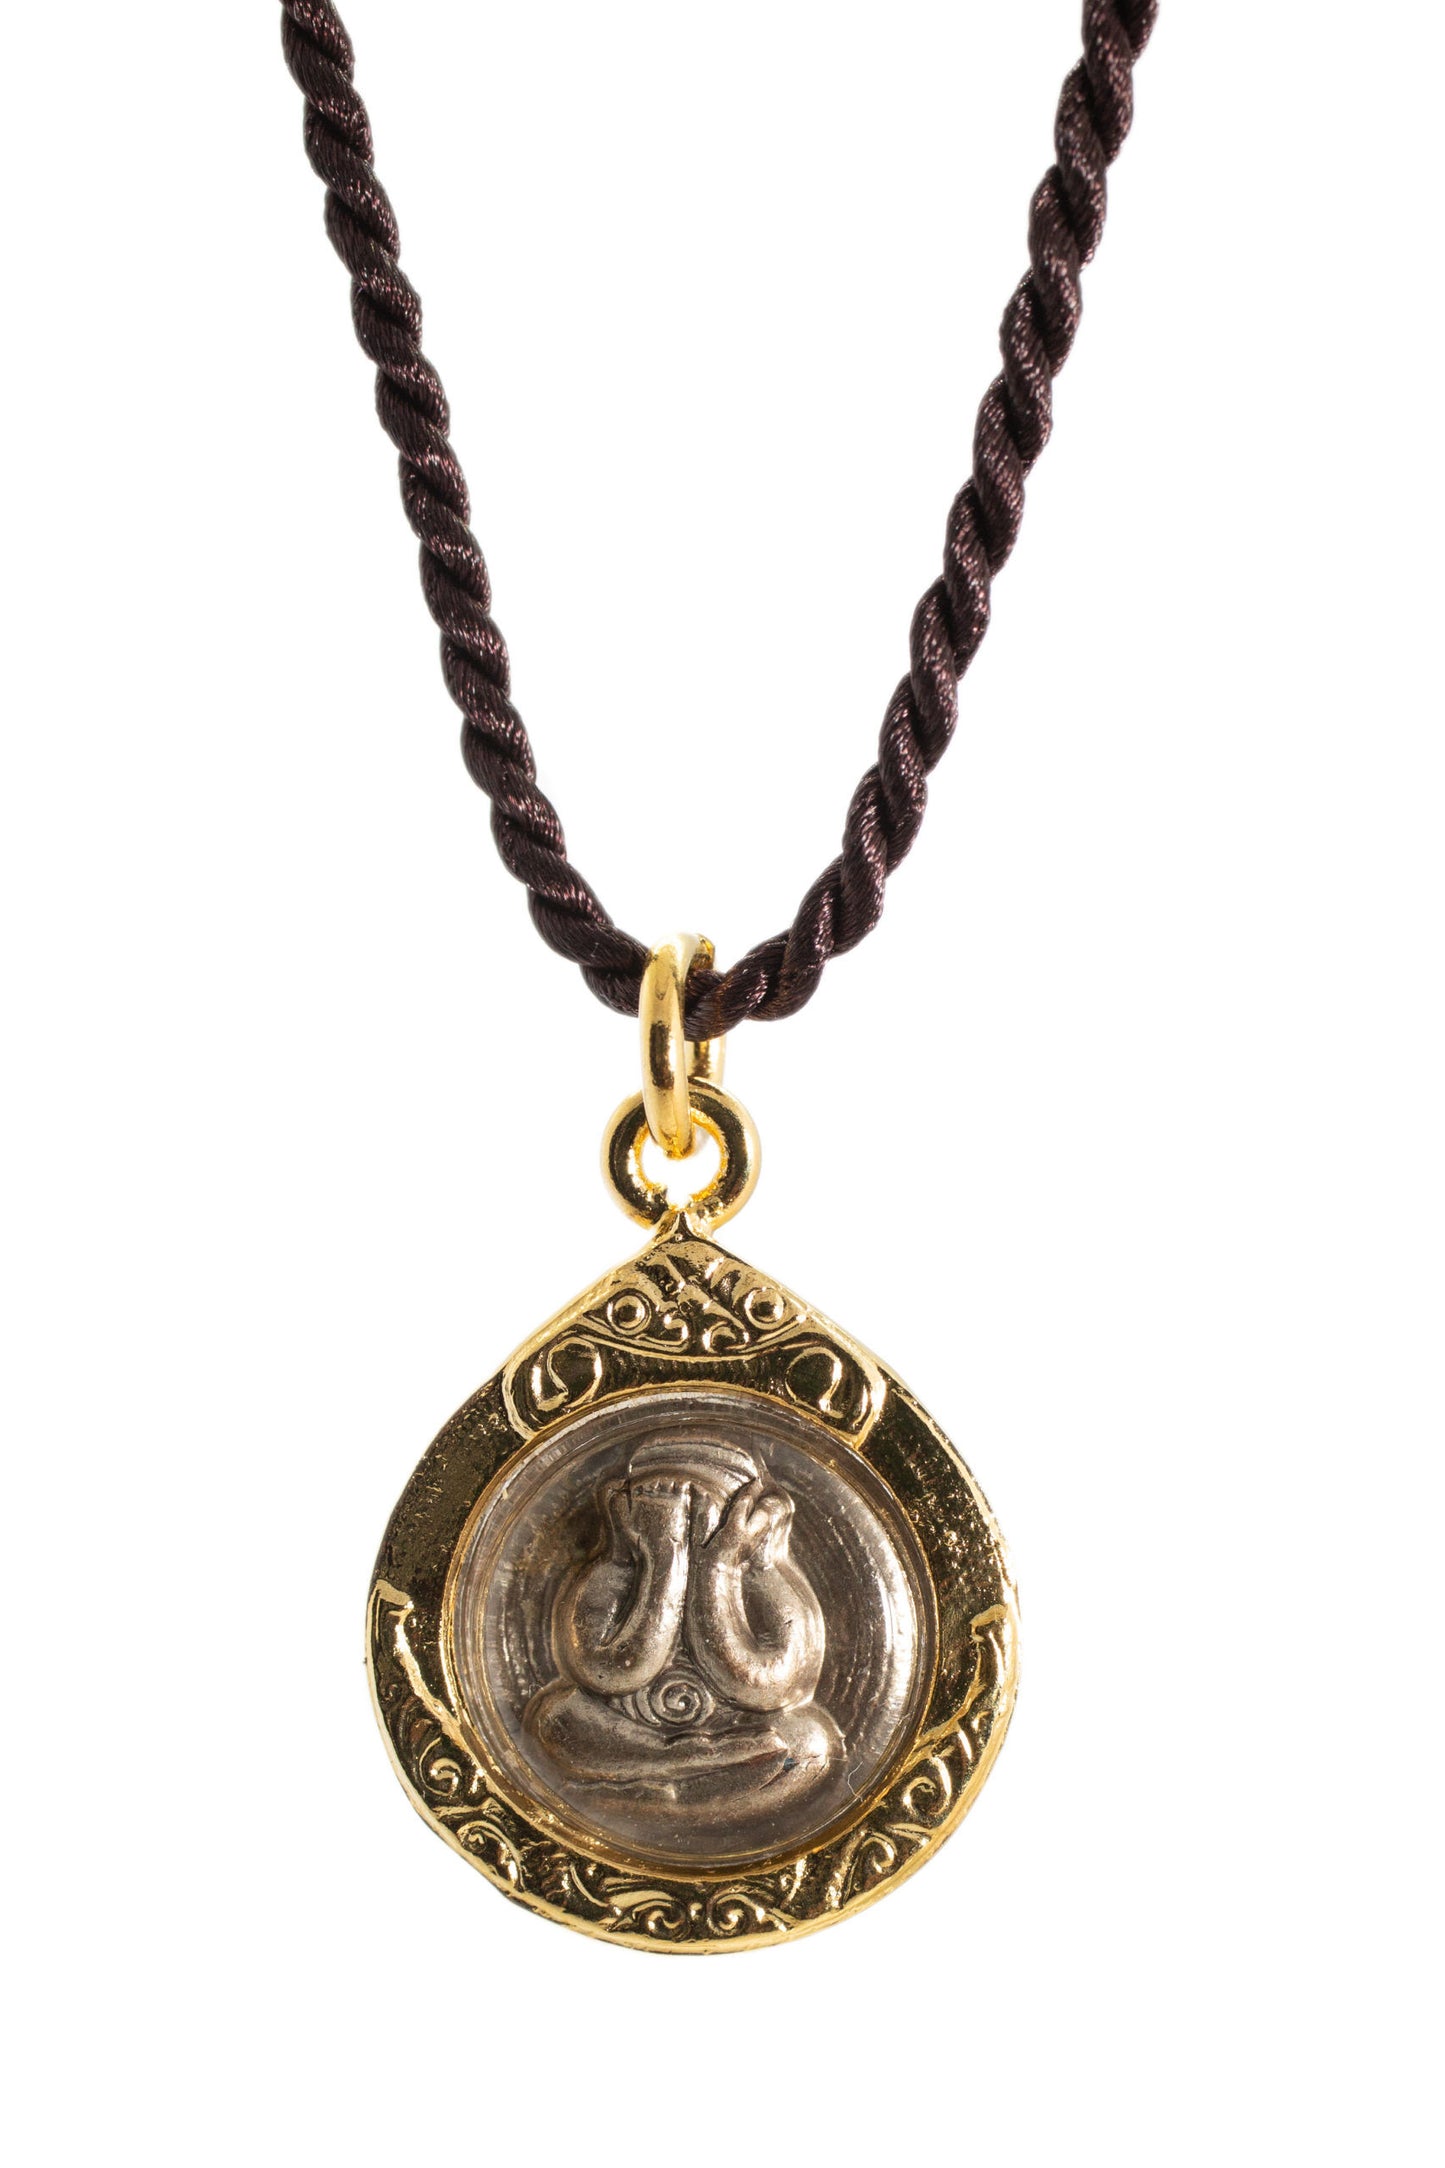 Artschatz - “The Weeping Buddha” Golden Amulet Thai Buddha Amulet Pendant